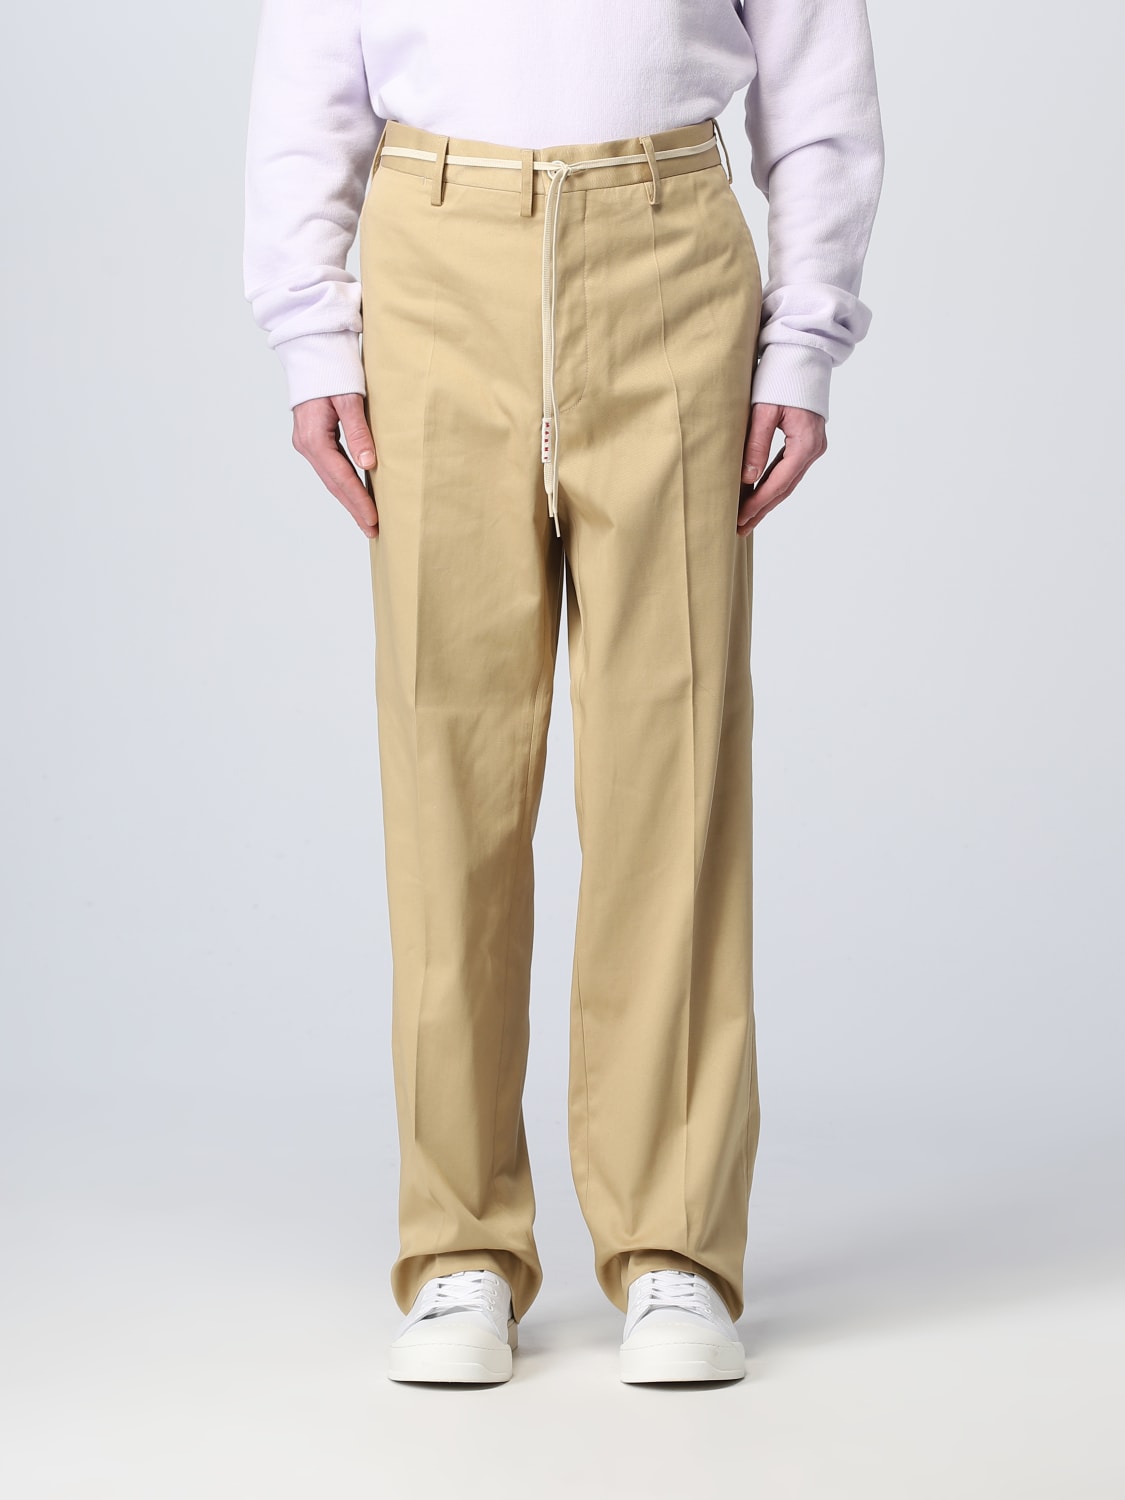 Marni cotton pants